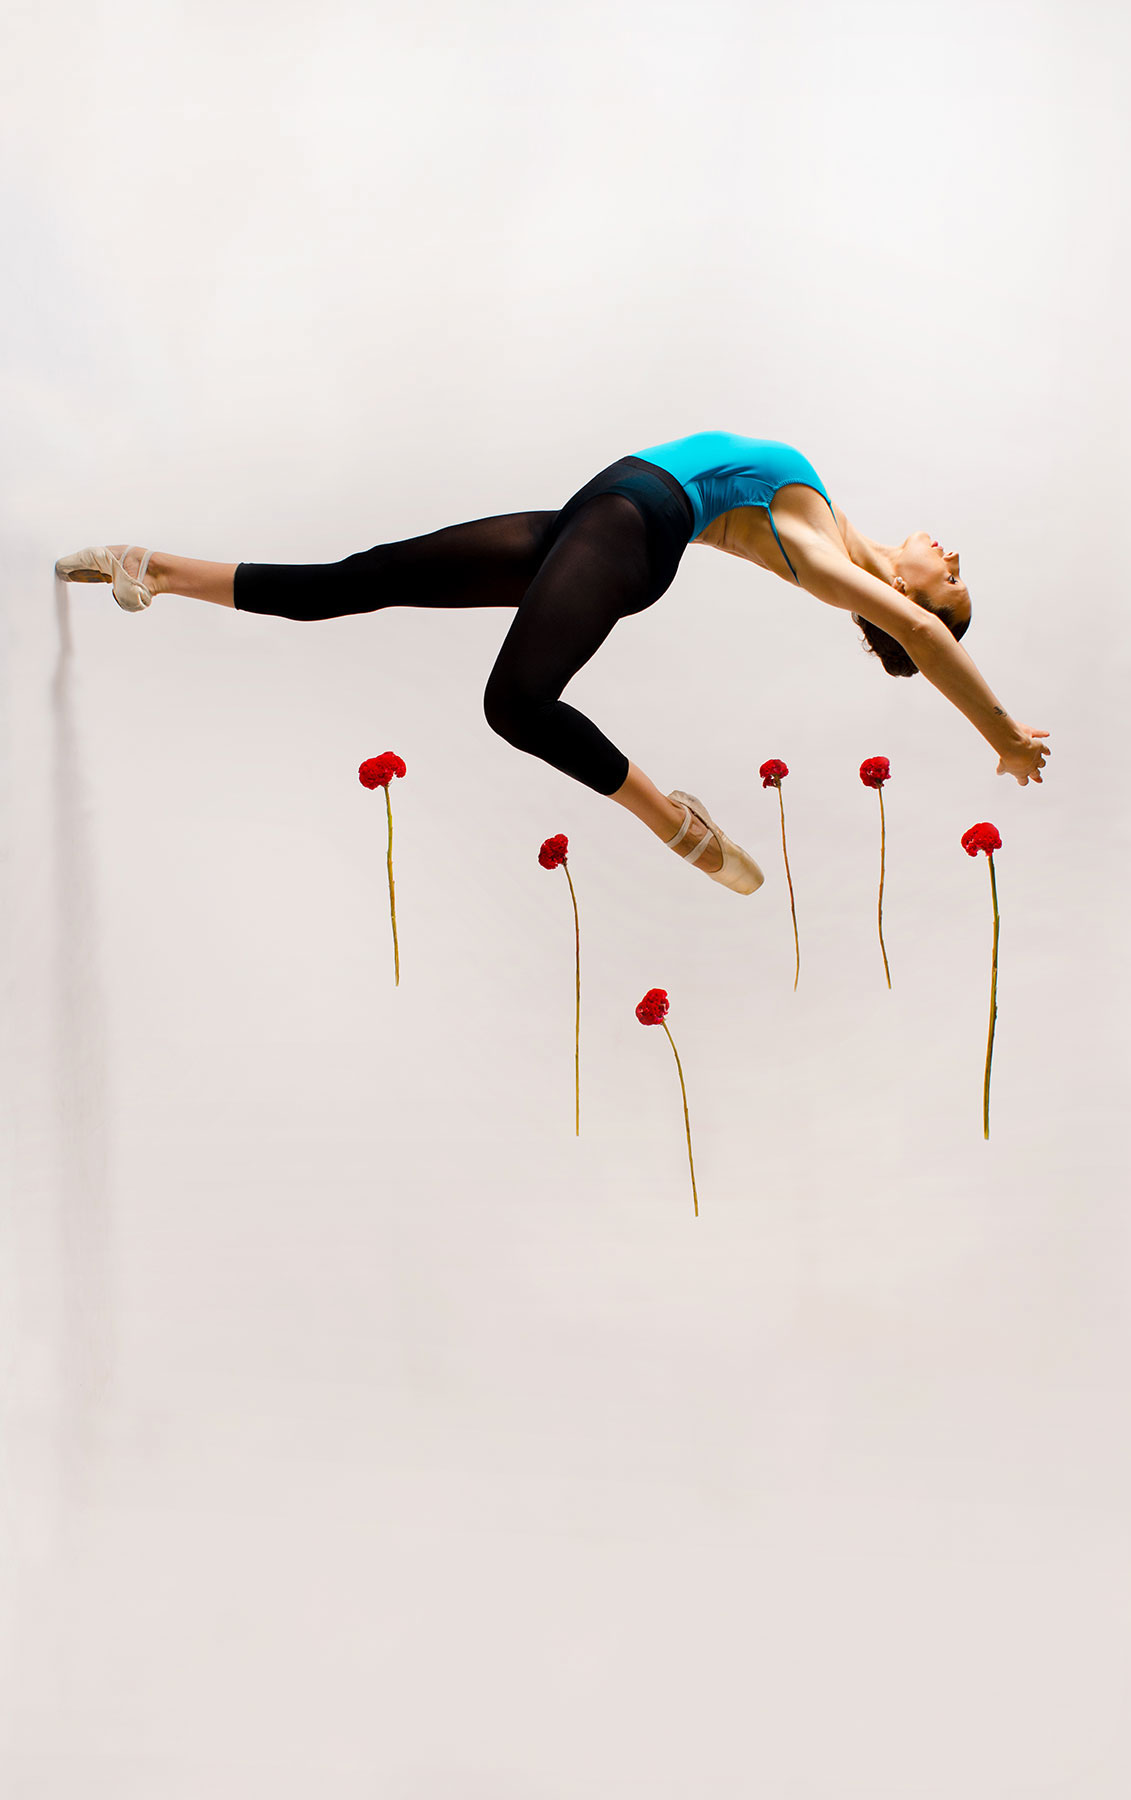 cuerpo body diseñadores arte art acrobatics dancer fire juggler glass